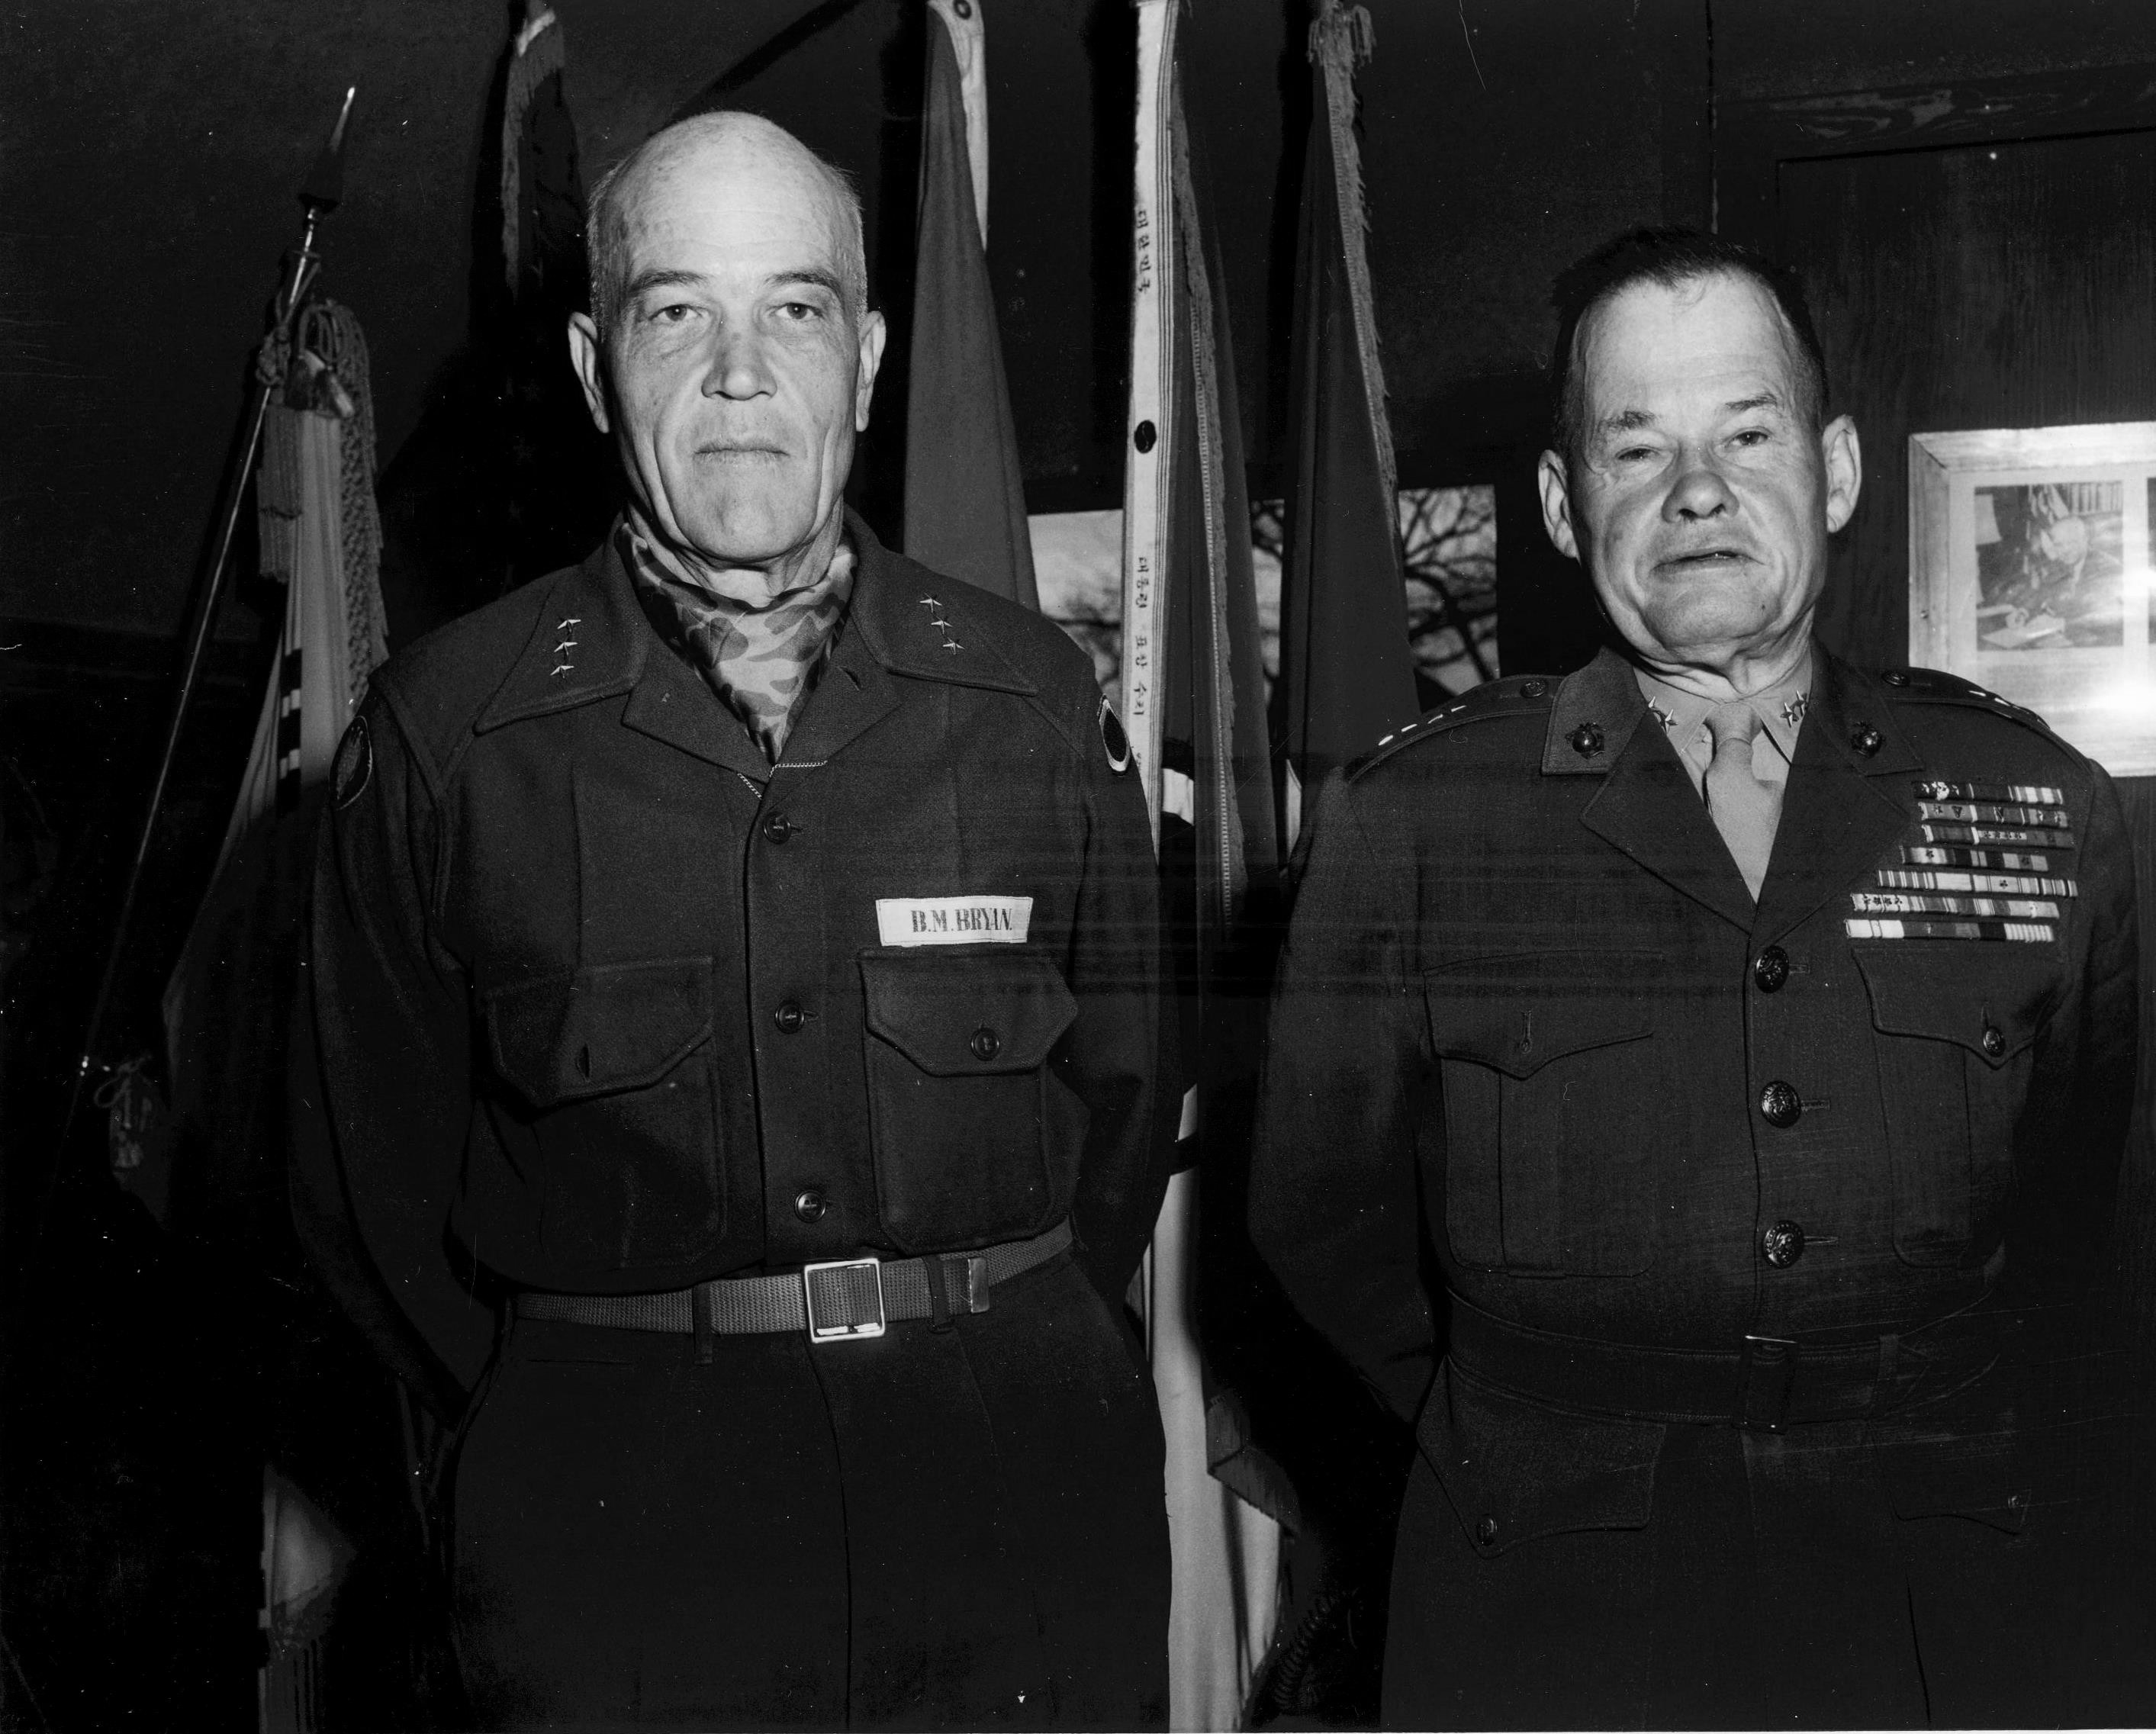 Lieutenant General Blackshear Bryan and Major General Lewis Puller at US Marine I Corps headquarters, 19 Apr 1954